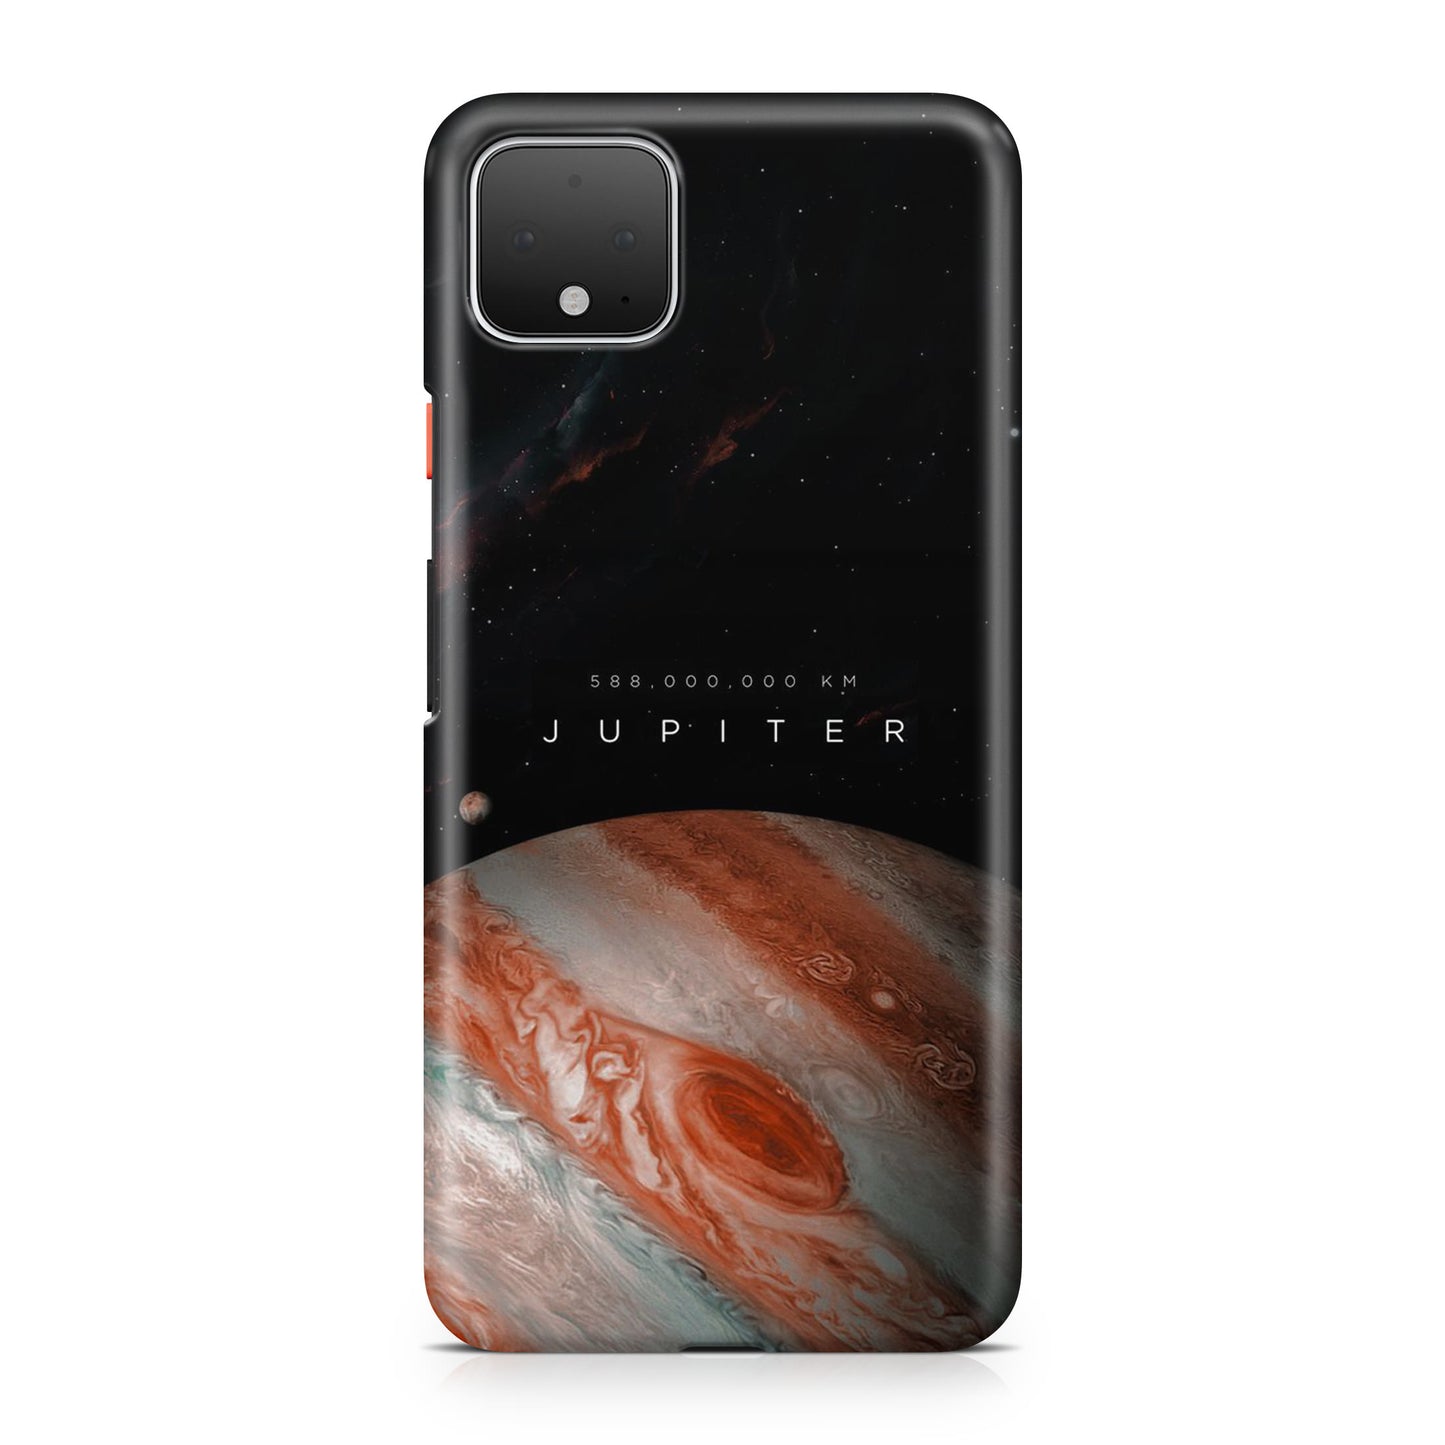 Planet Jupiter Google Pixel 4 / 4a / 4 XL Case